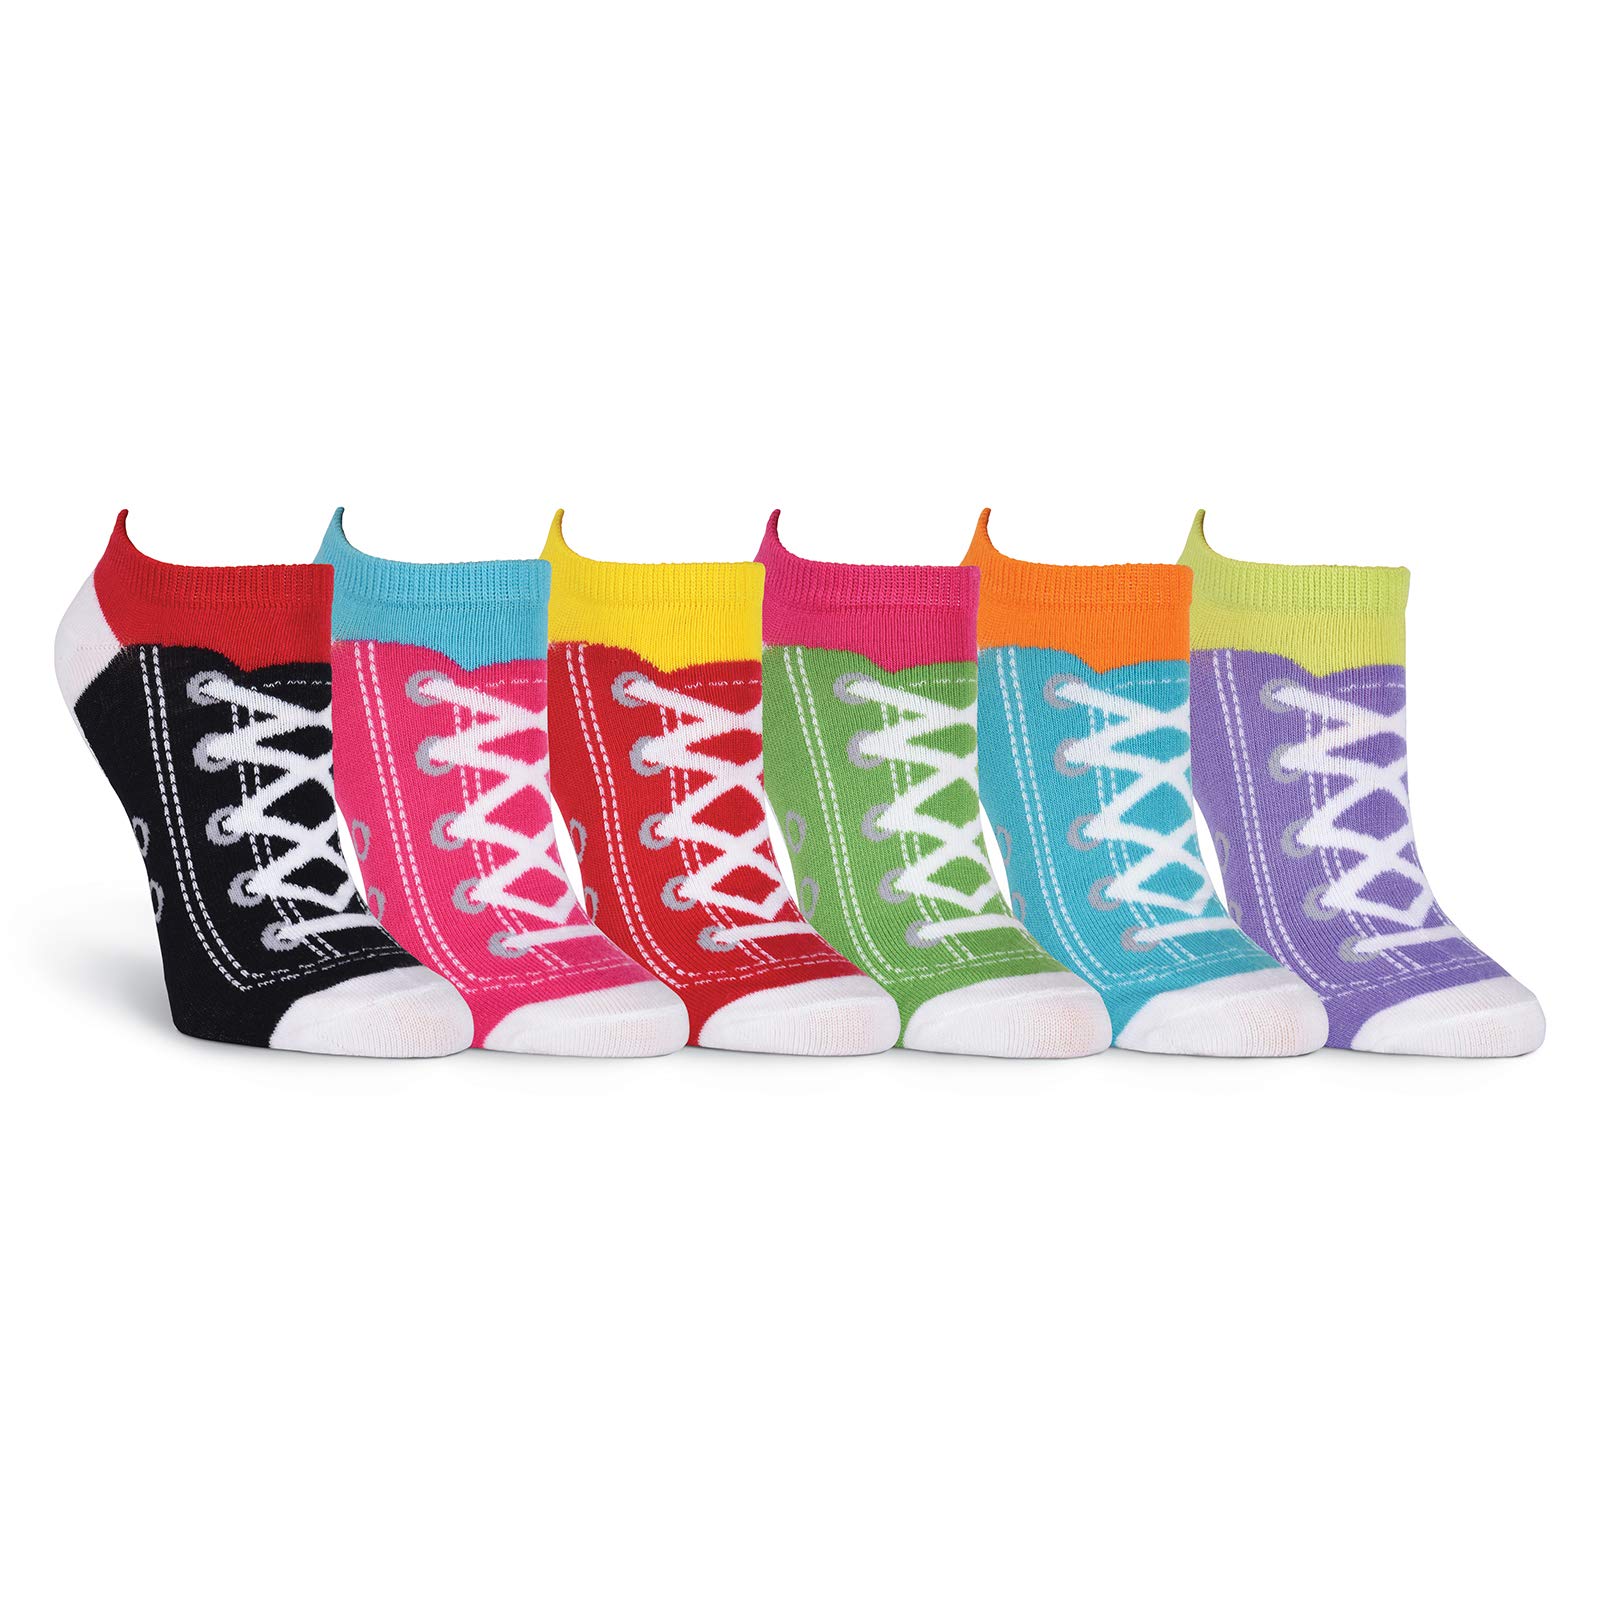 K. Bell Socks womens 6 Pair Pack Fun Pop Culture Funny Novelty Low Cut No Show Socks